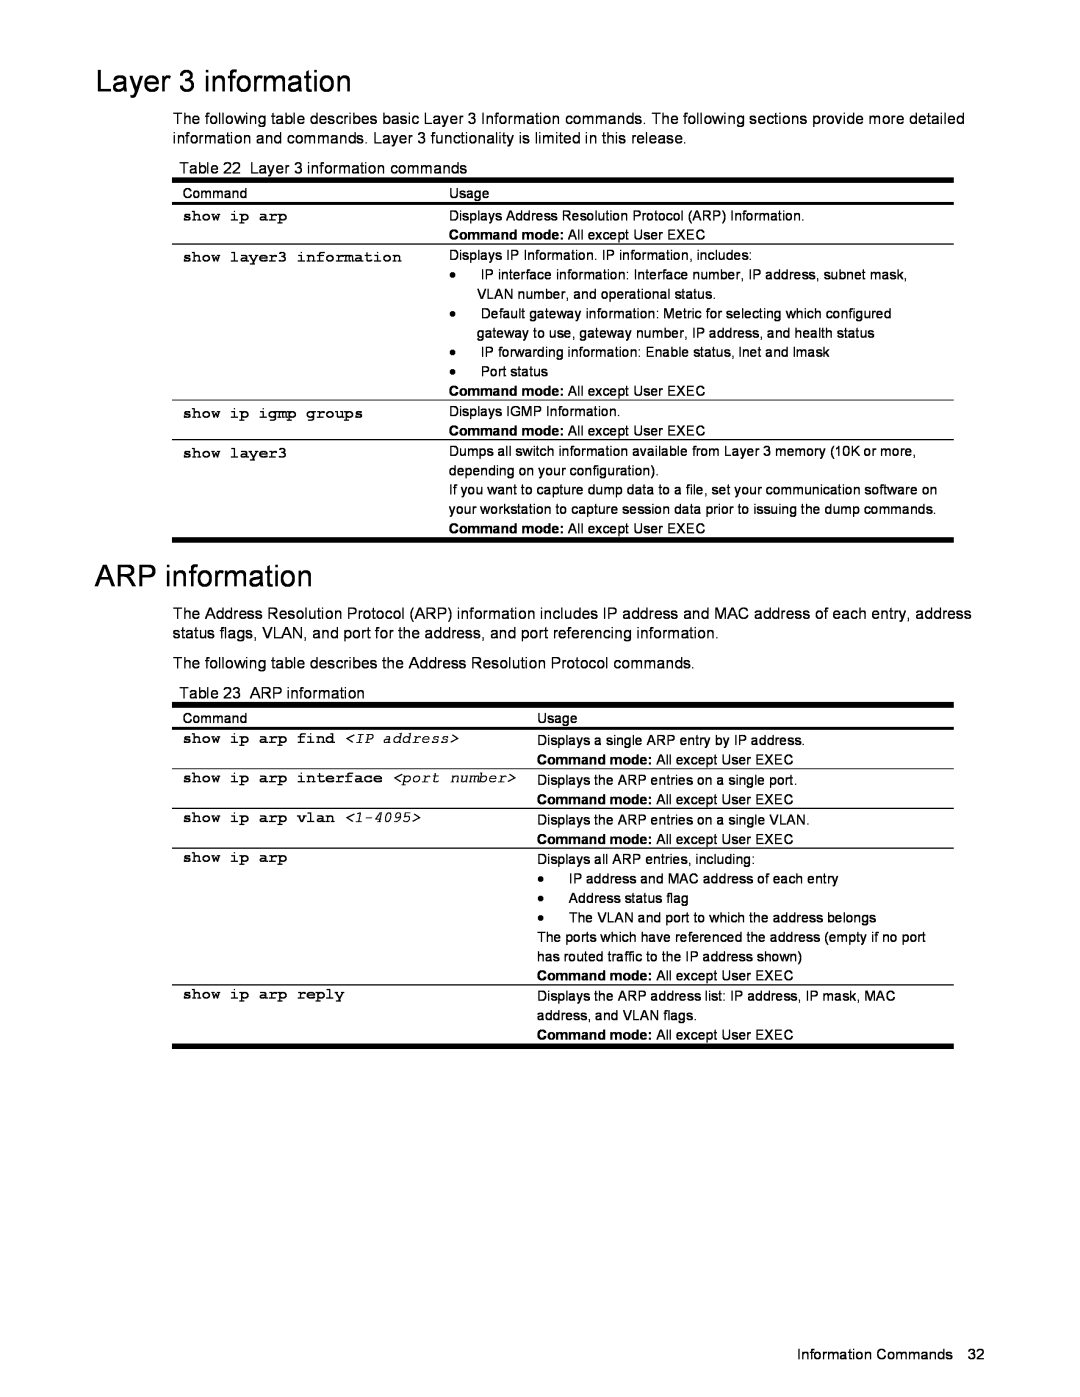 NEC N8406-022 manual Layer 3 information, ARP information, show ip arp, show layer3 information, show ip igmp groups 